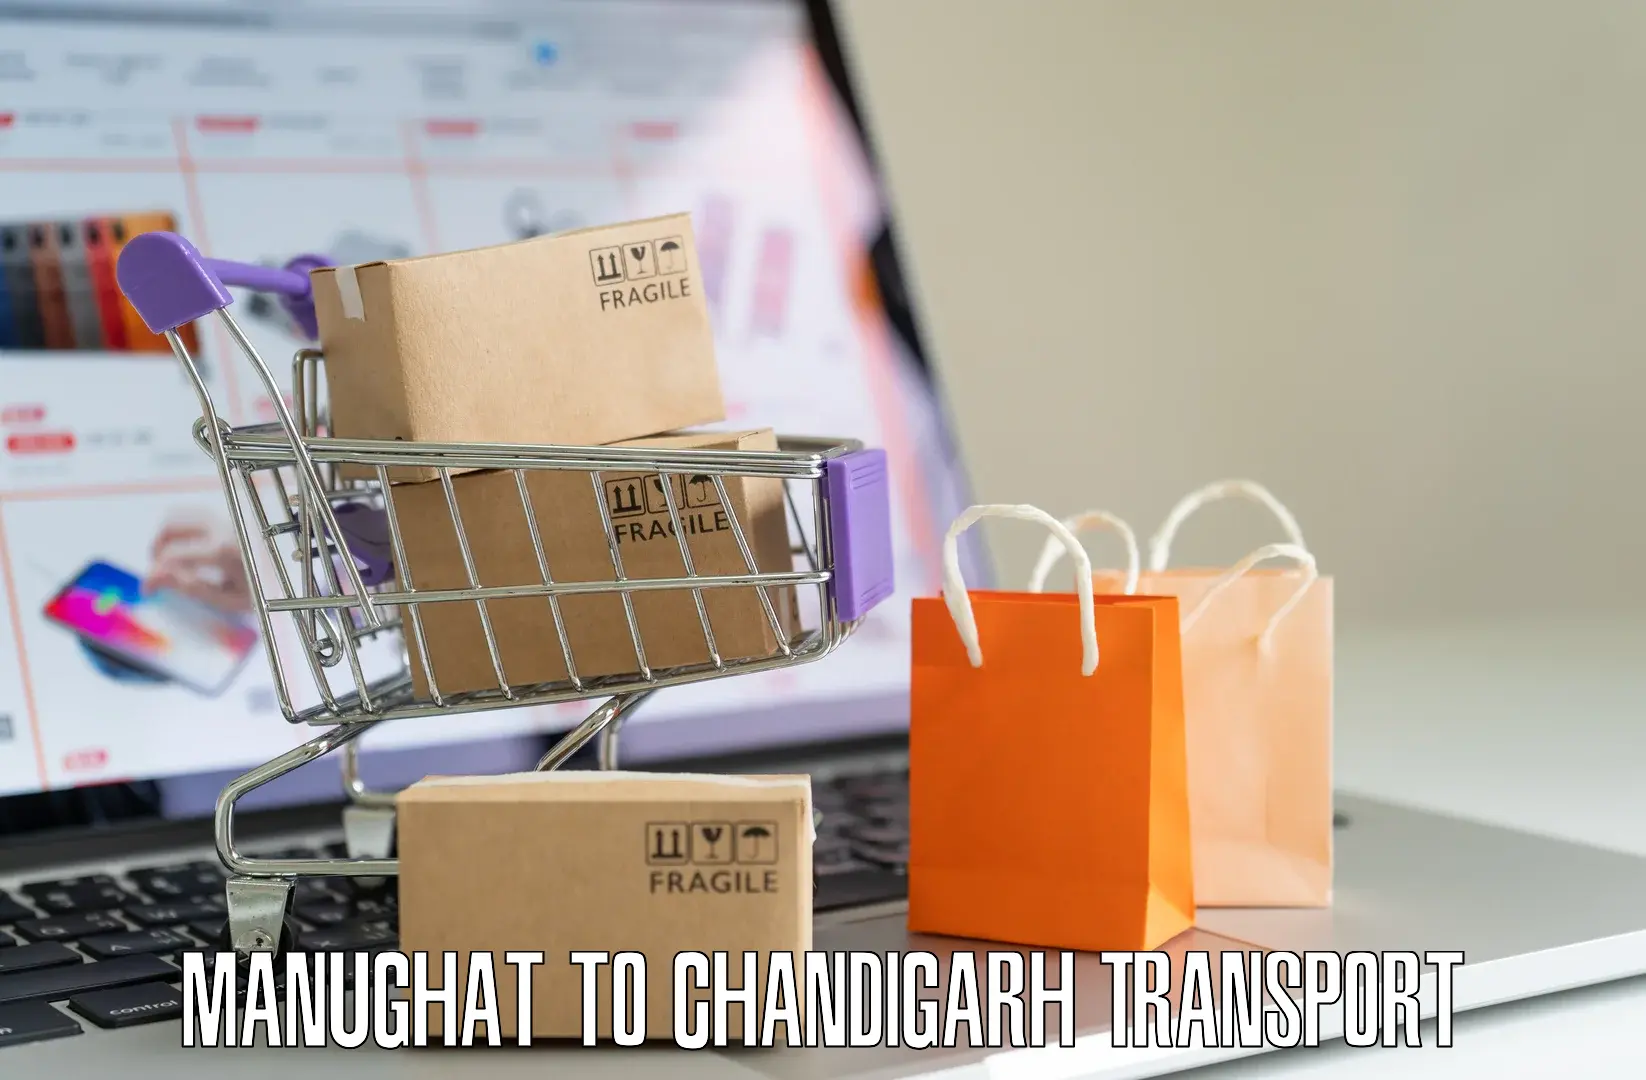 Furniture transport service Manughat to Chandigarh